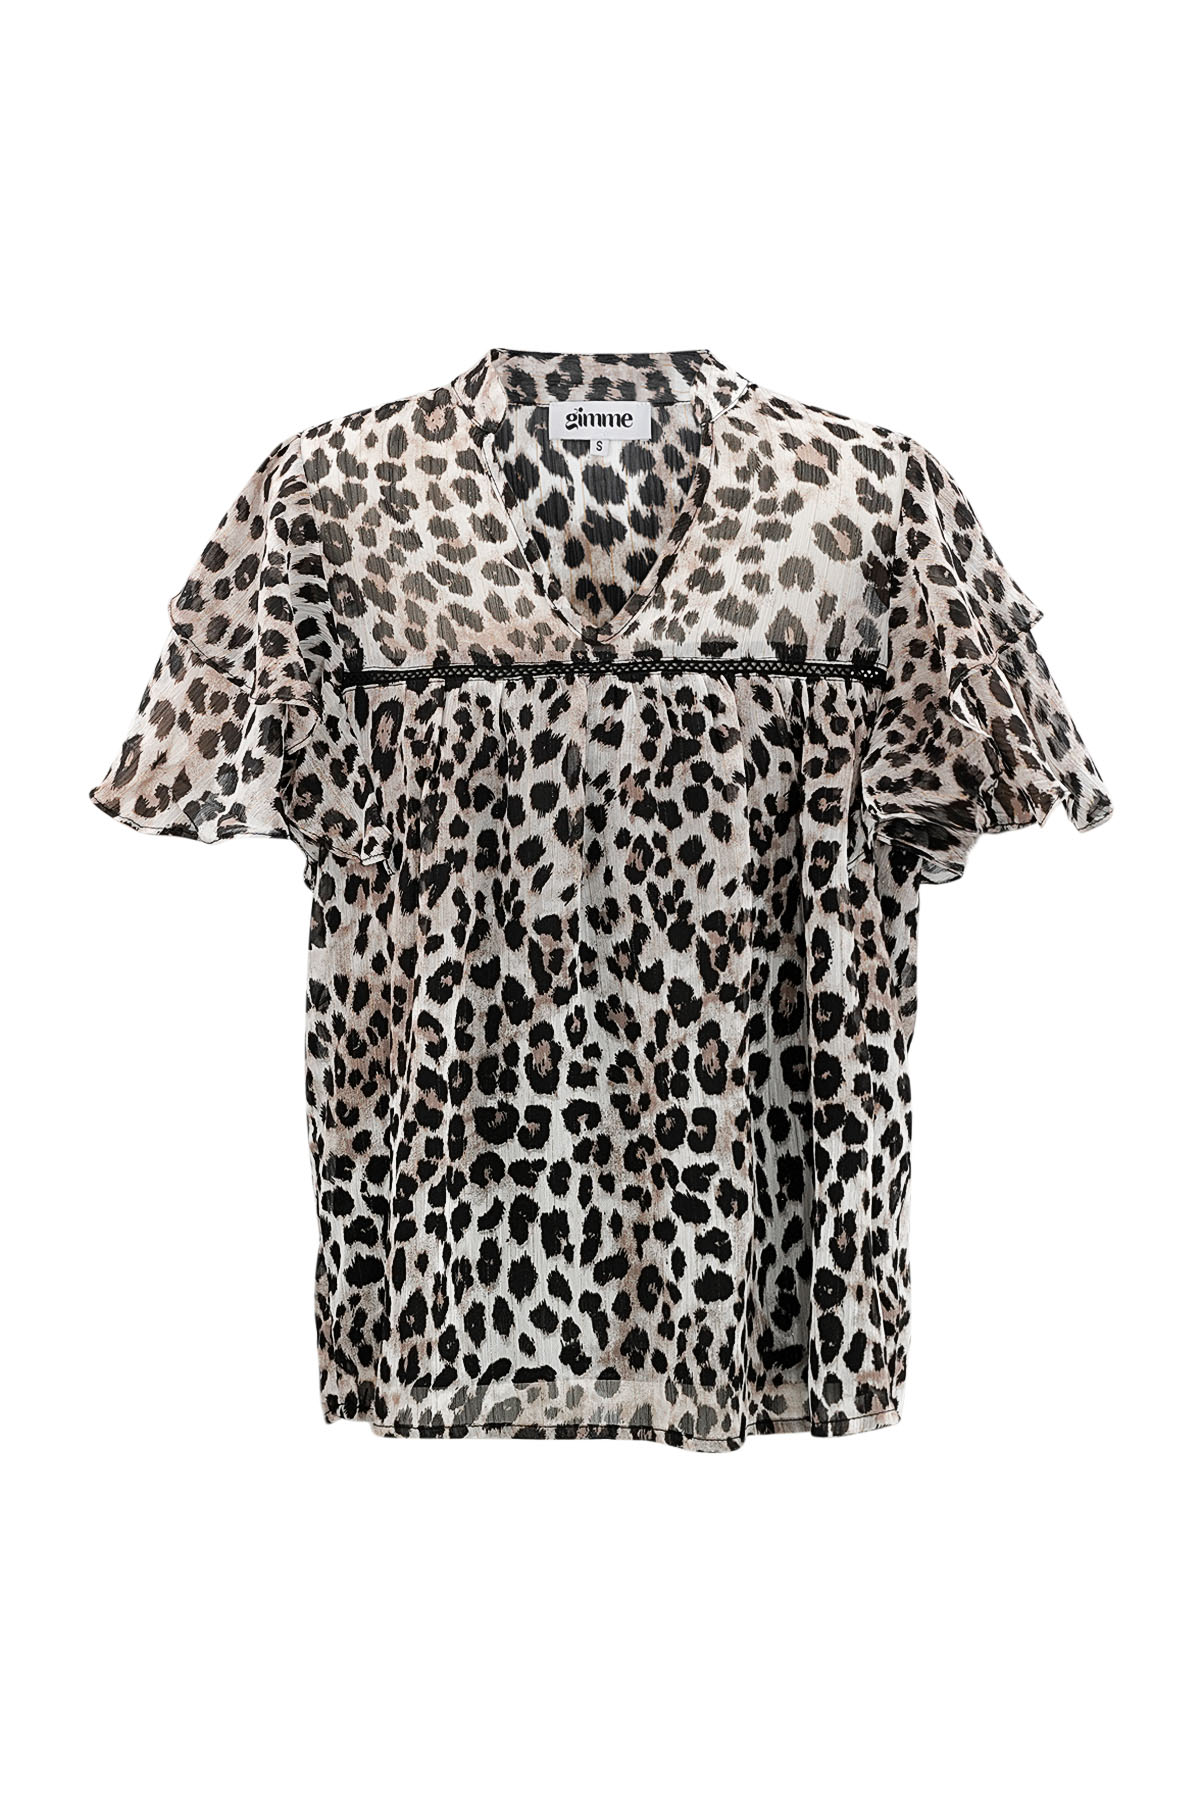 Leopard print top flare sleeves - brown h5 